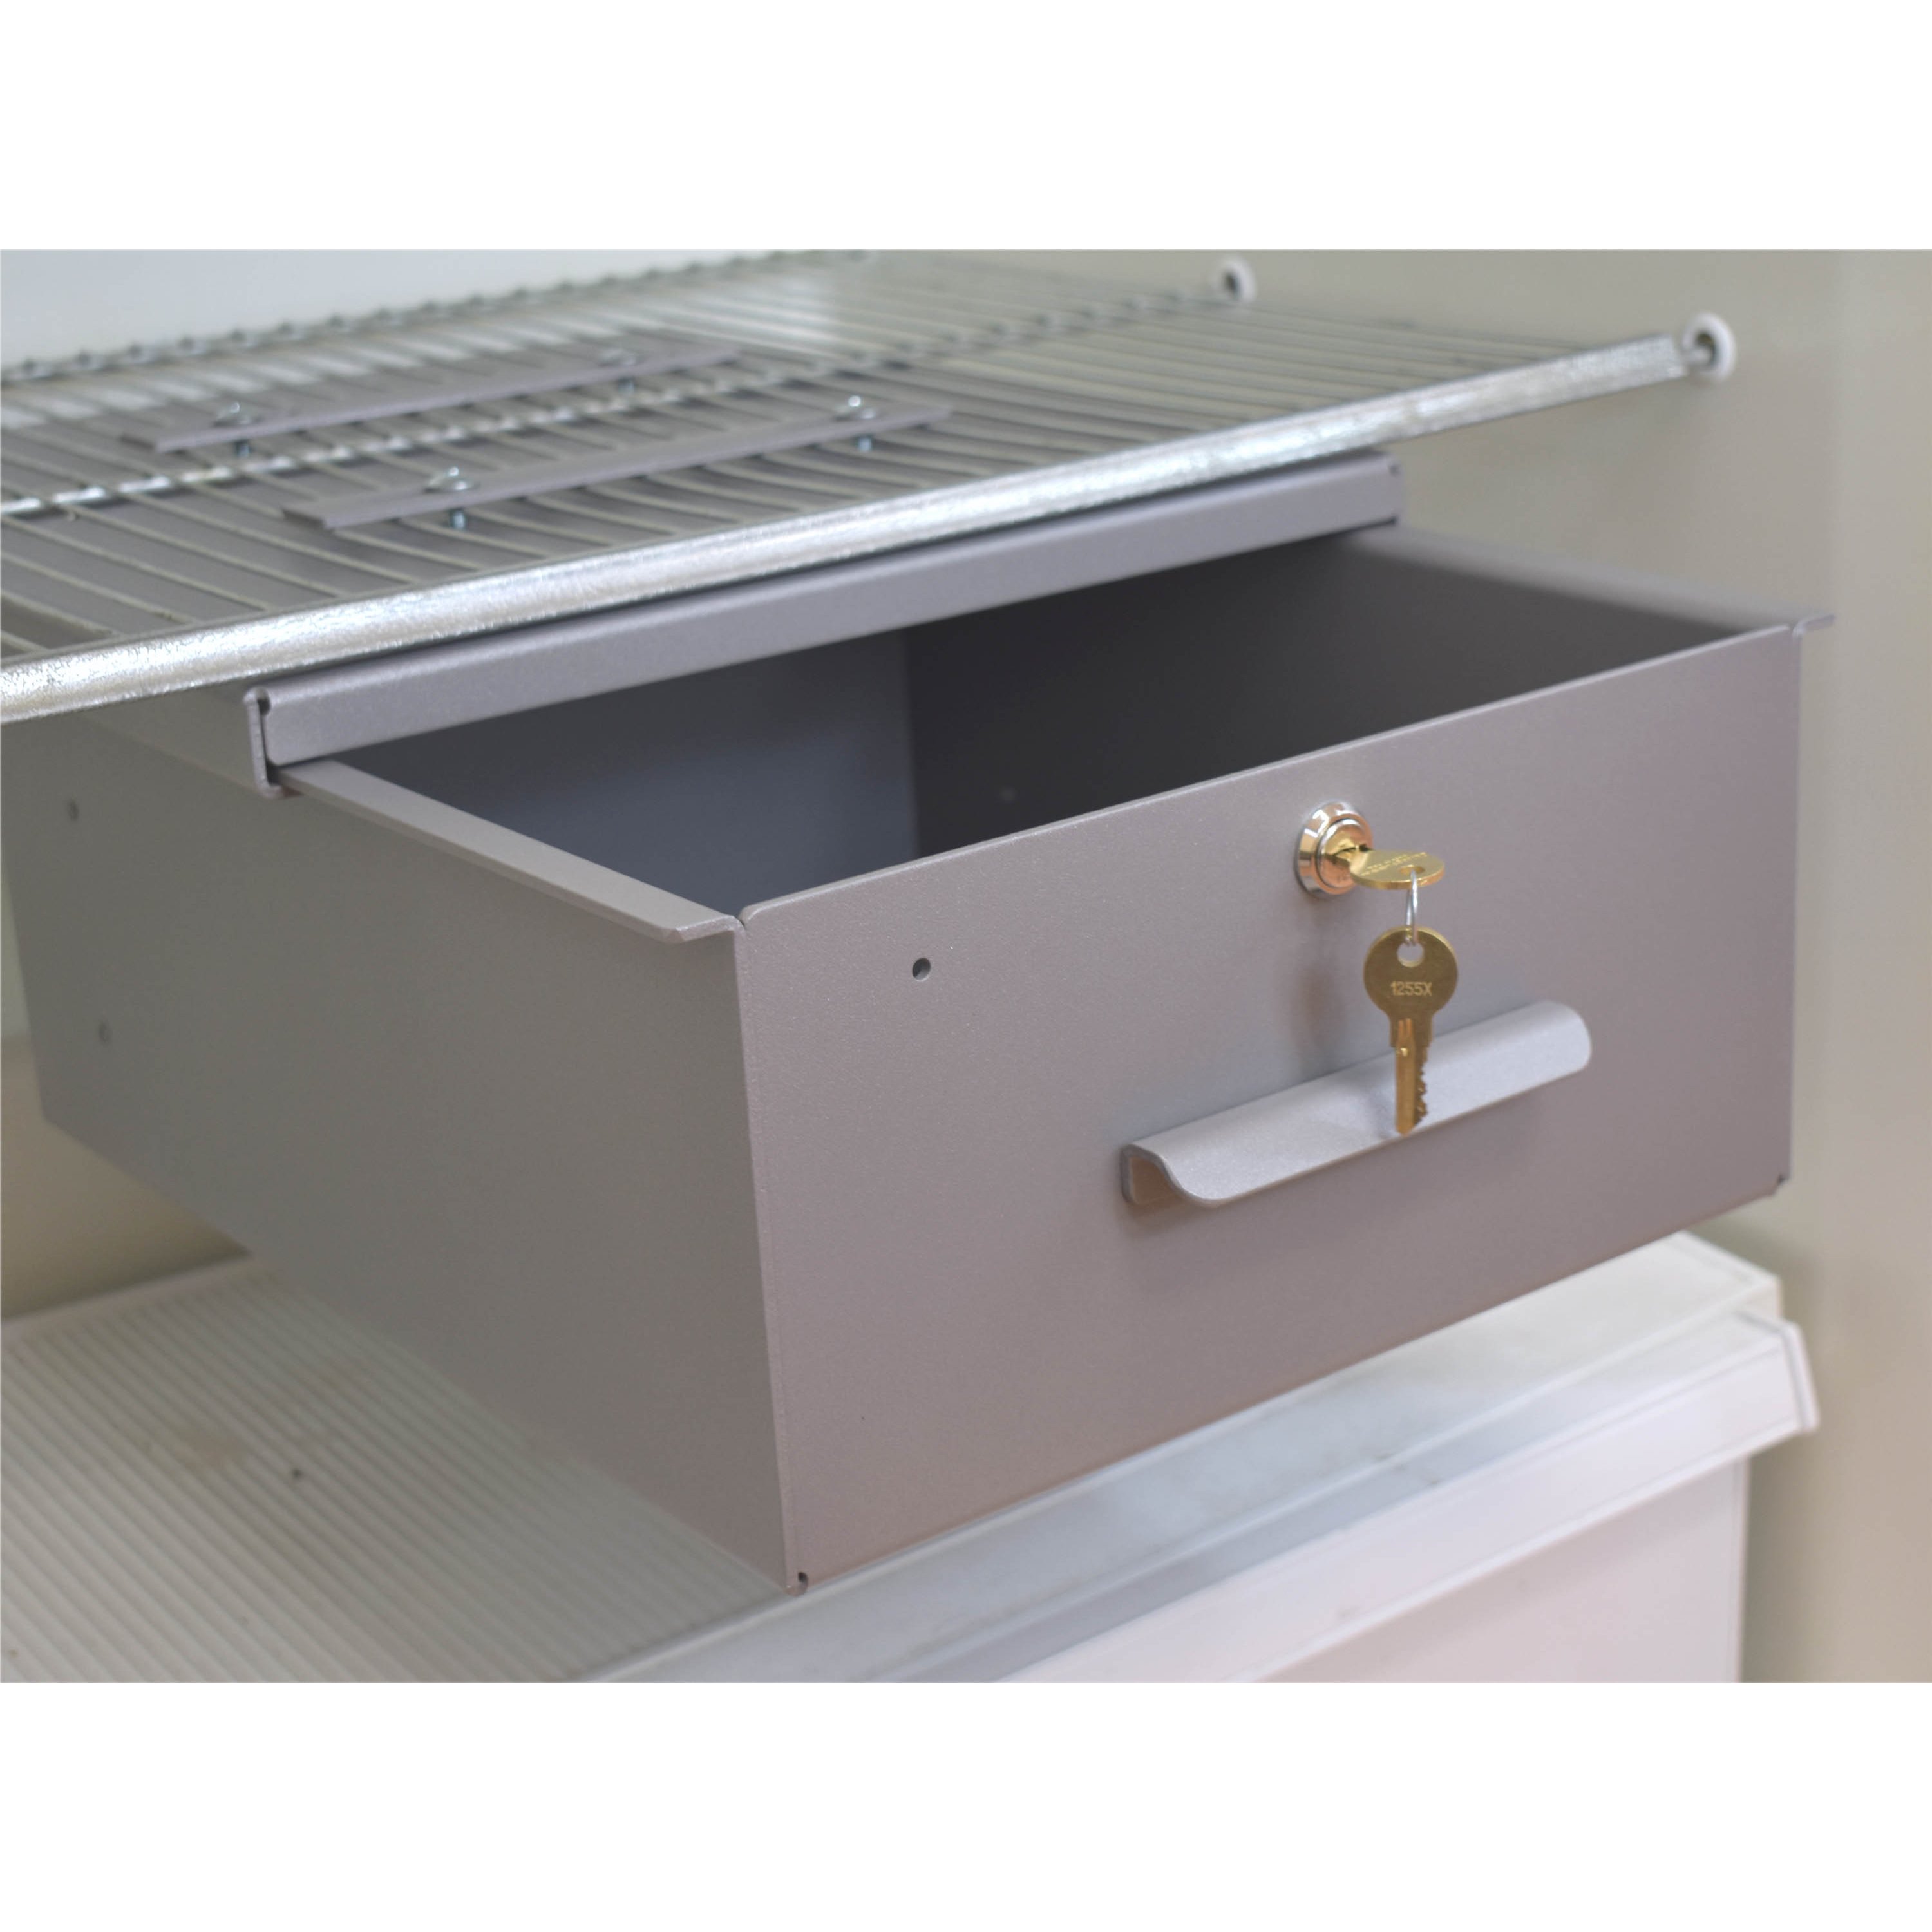 Item 17508 - Deluxe Compact Refrigerator Box, Key Lock